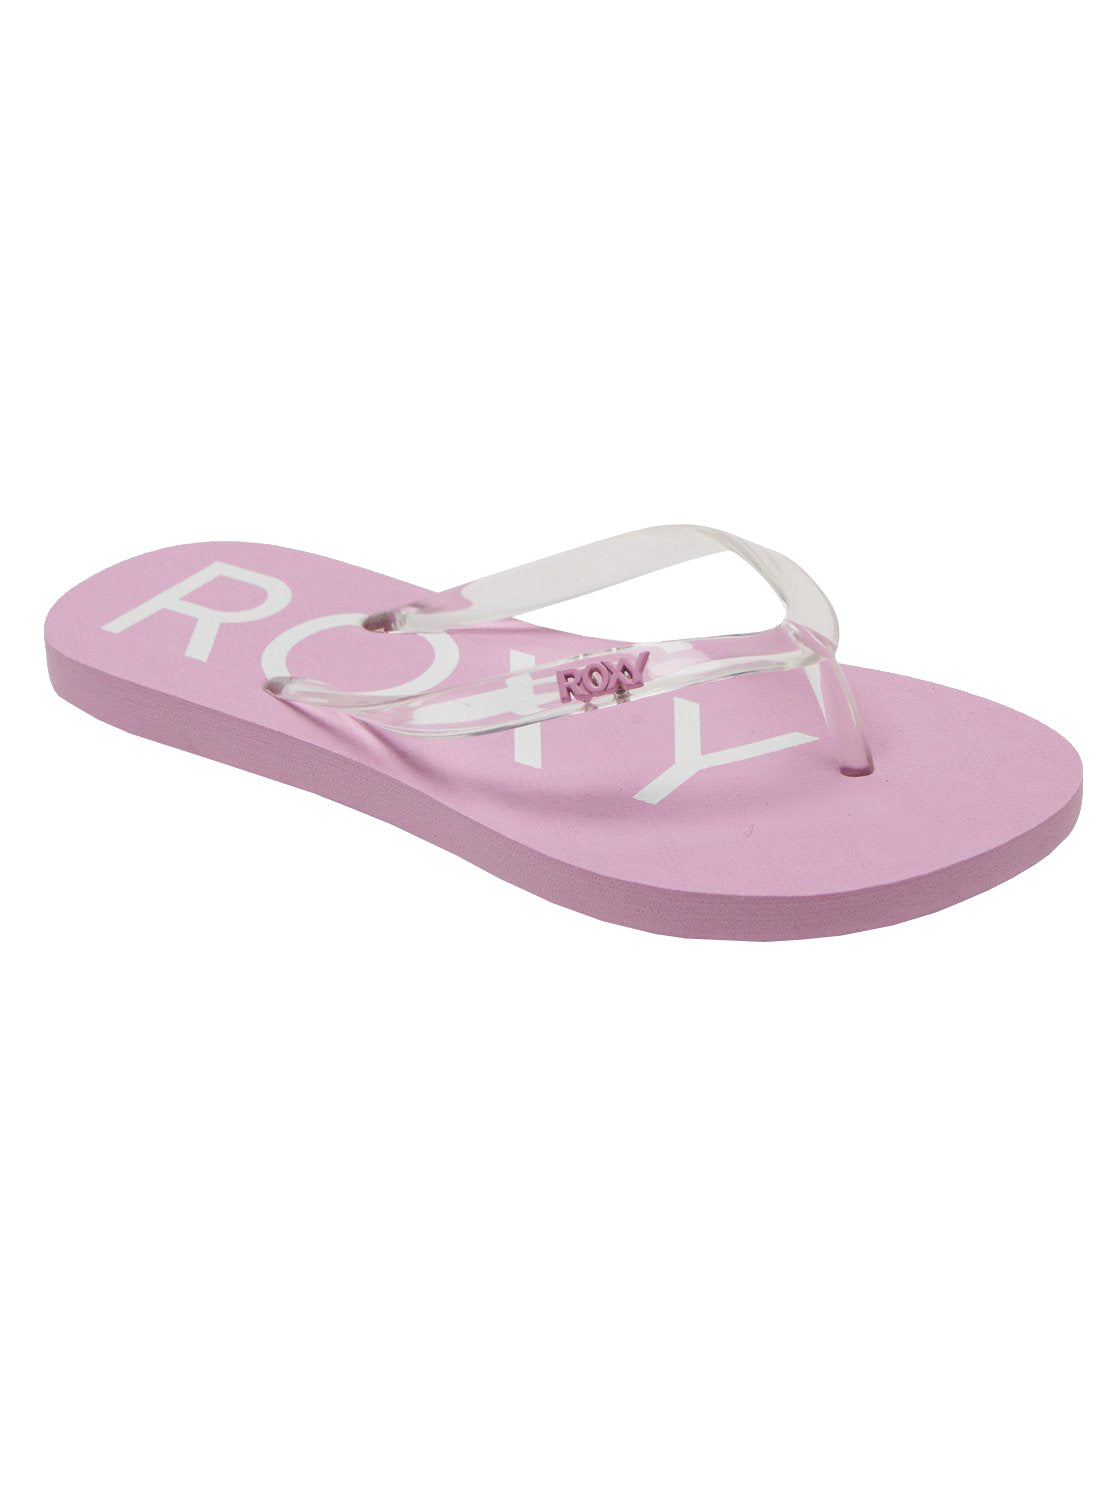 Roxy Viva Jelly Girls Sandal LRS-Lilac Rose 1 Y